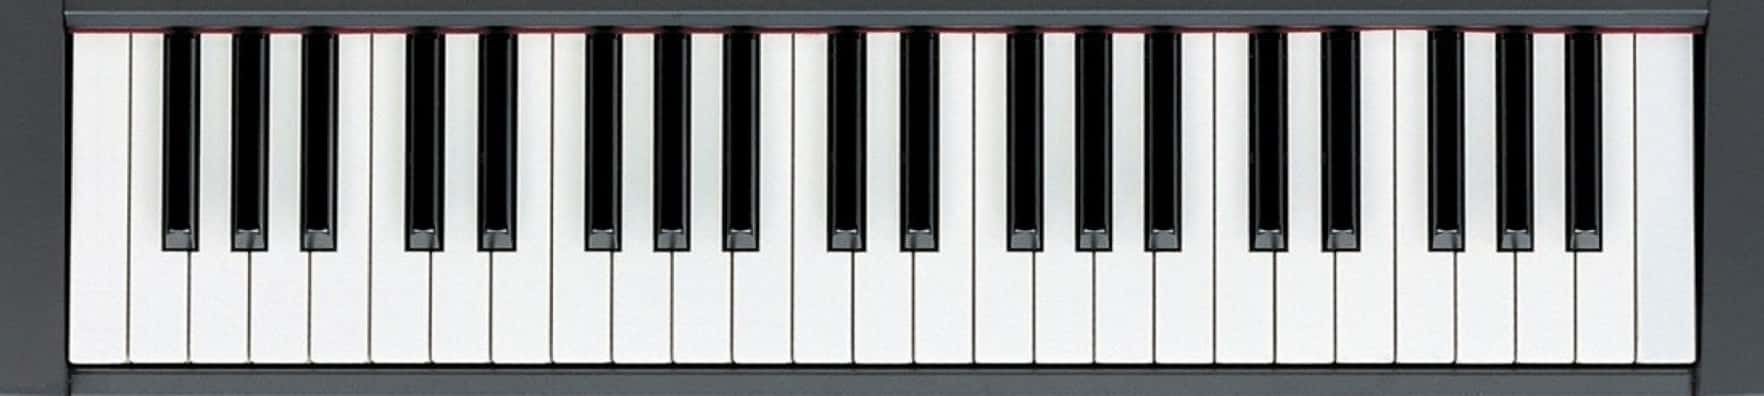 The piano keyboard